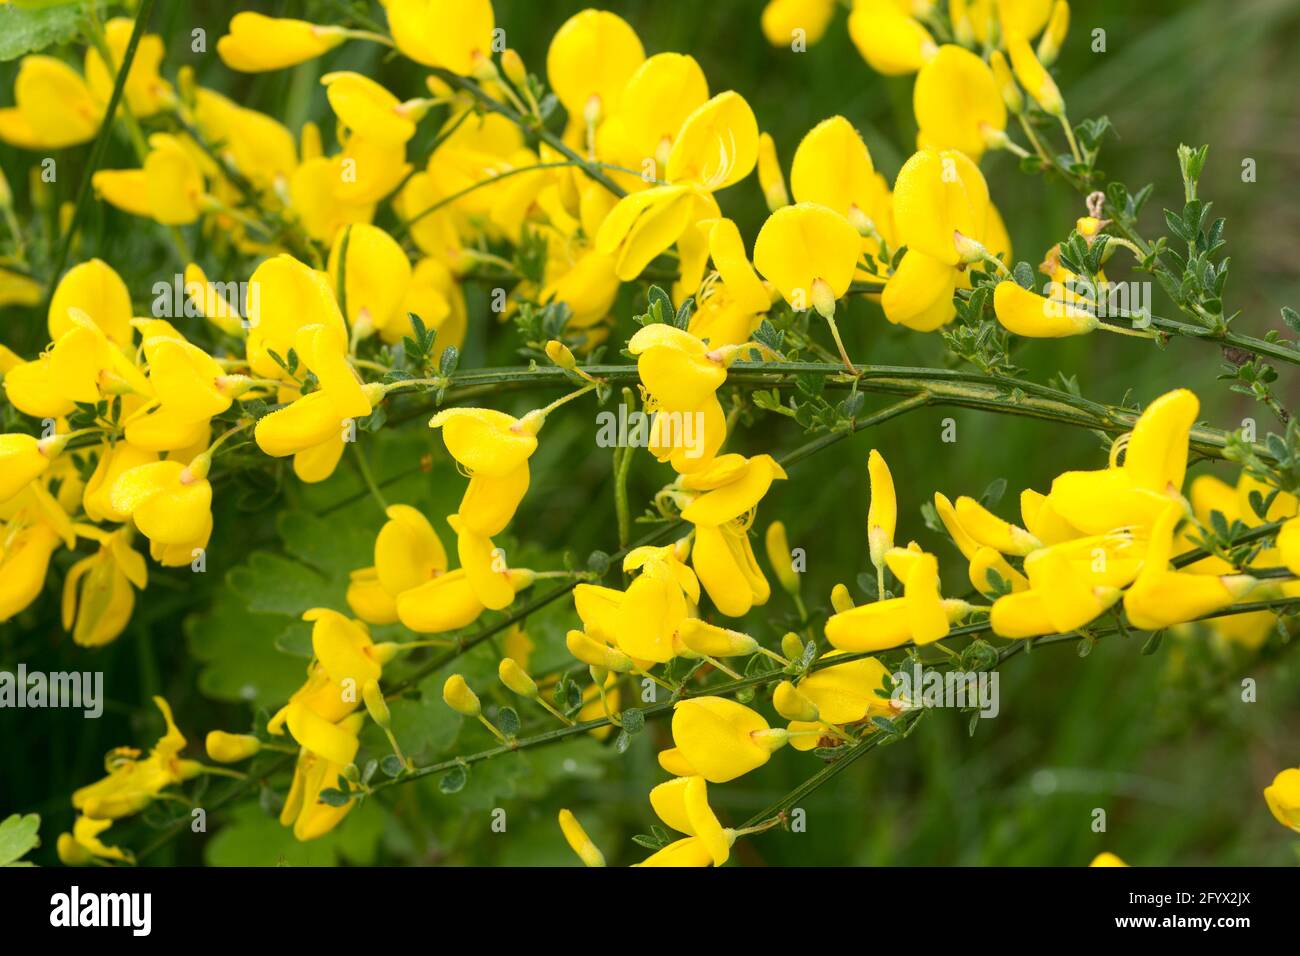 Cytisus scoparius common broom shrub with yellow flowers closeup selective focus Stock Photo